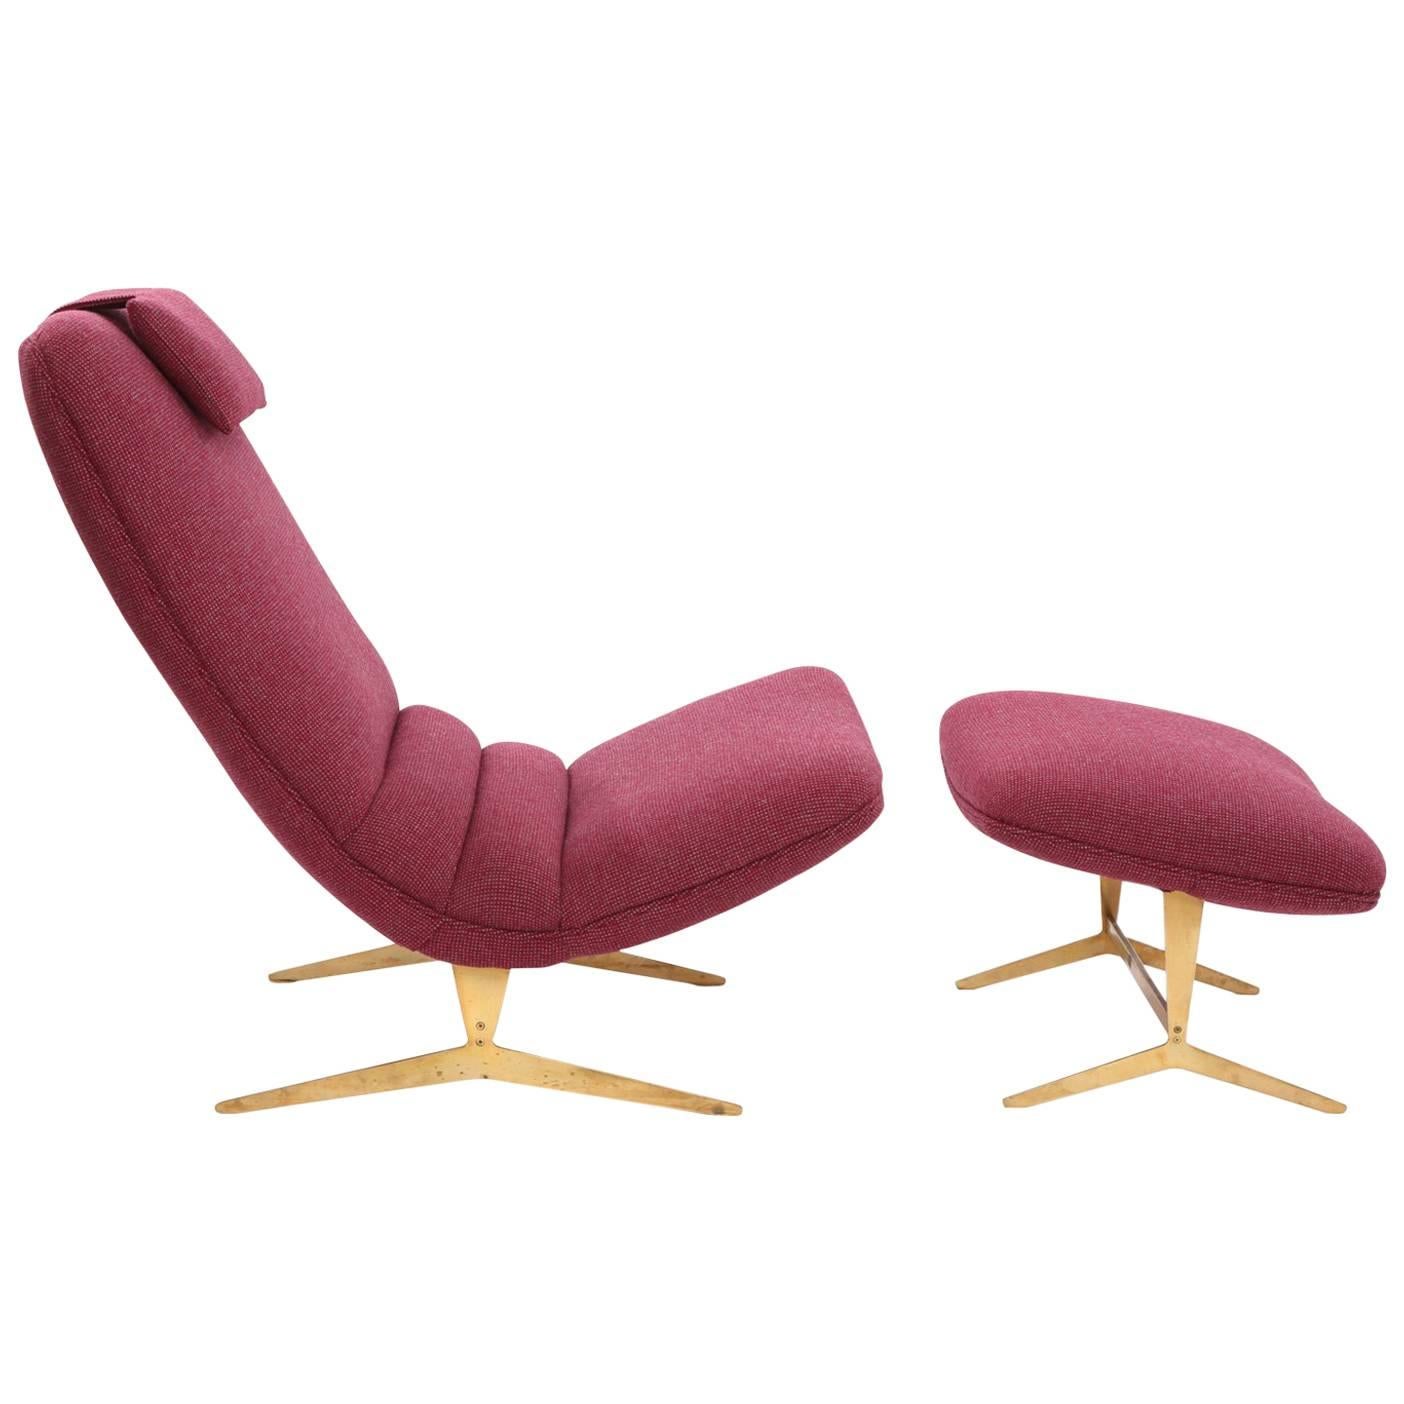 Stunning Italian Lounge Chair and Ottoman